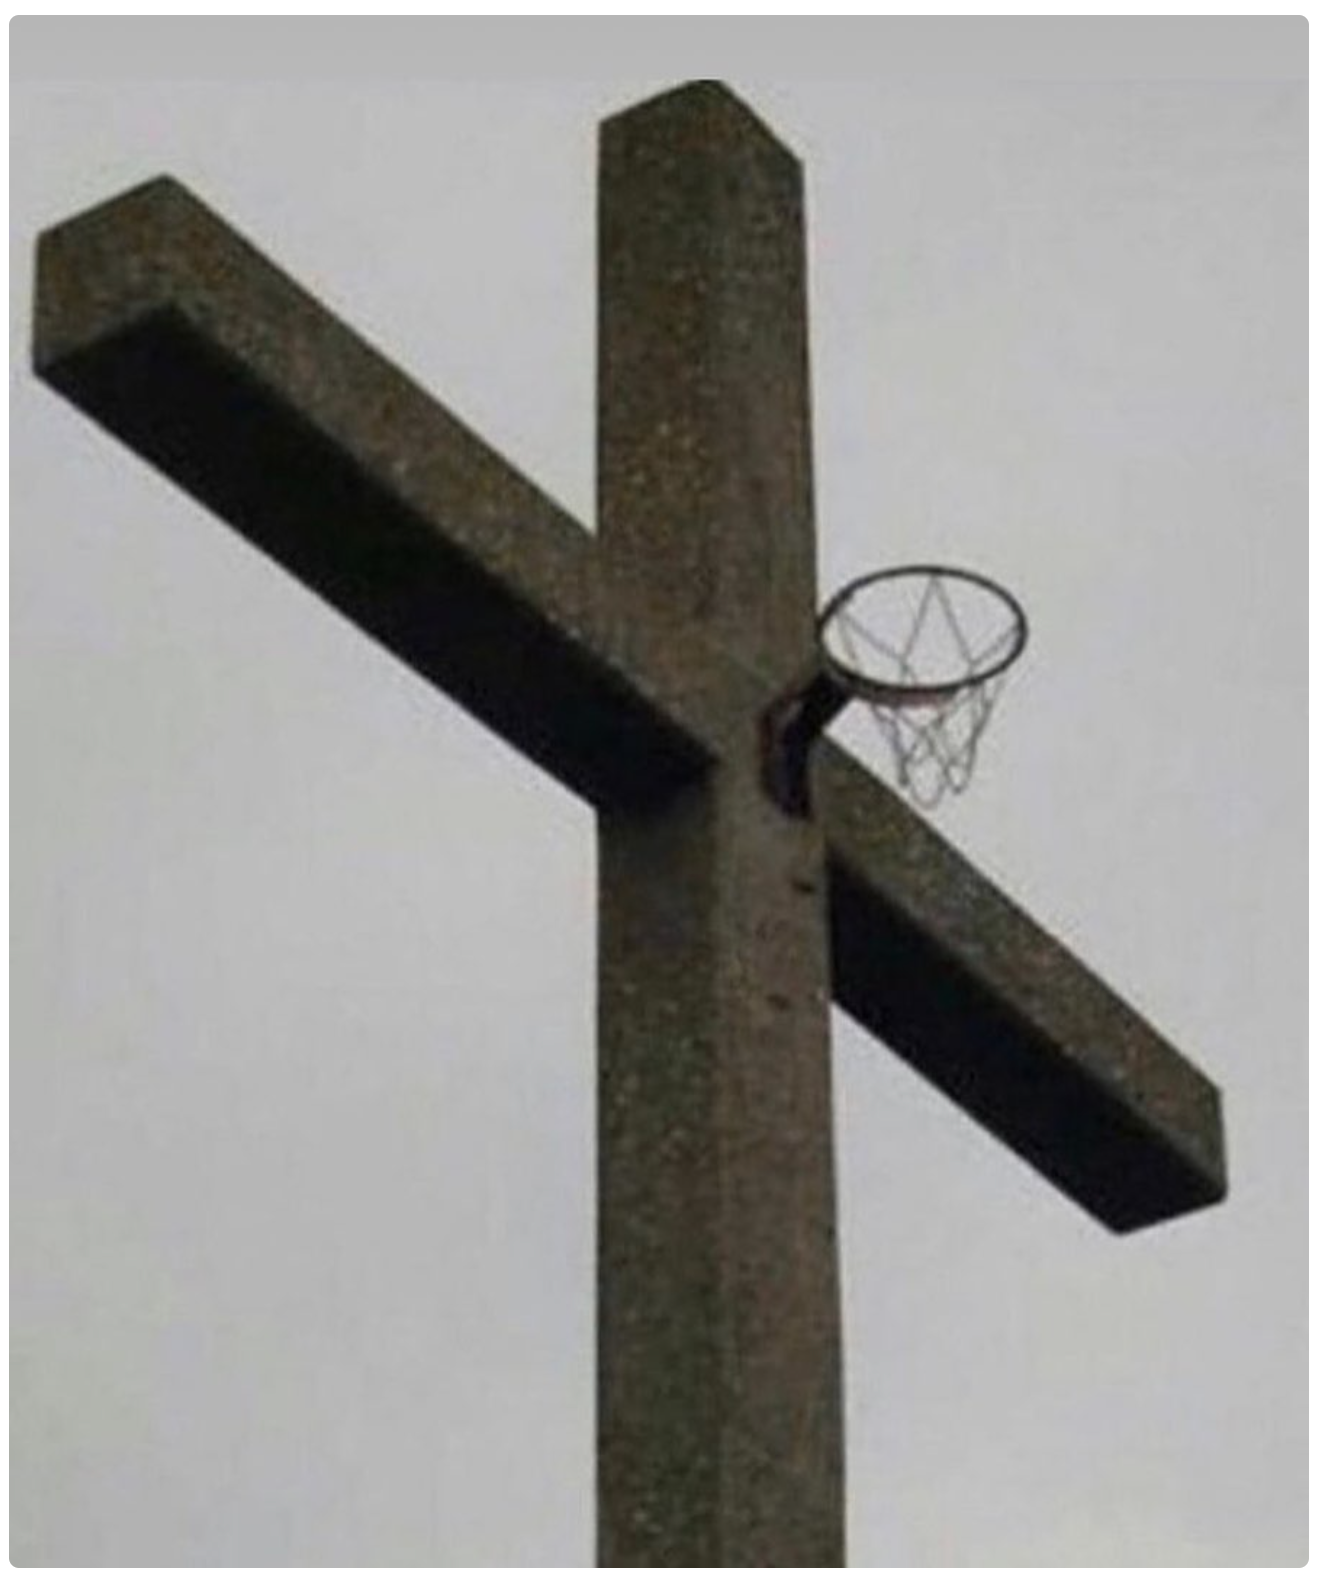 Shooting hoops with Jesus.